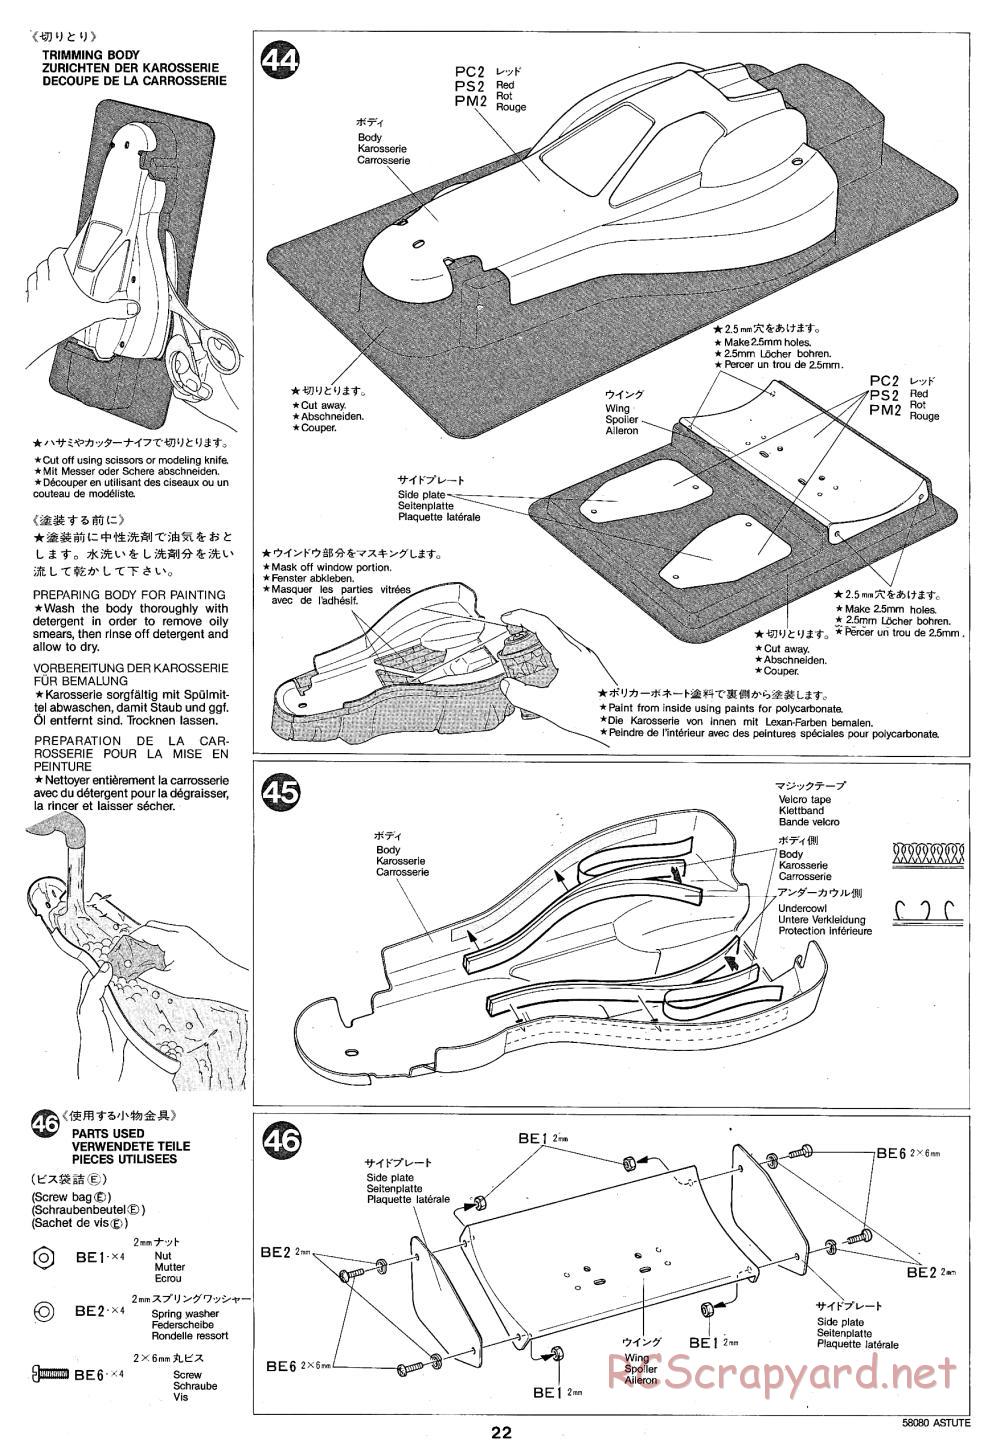 Tamiya - Astute - 58080 - Manual - Page 22